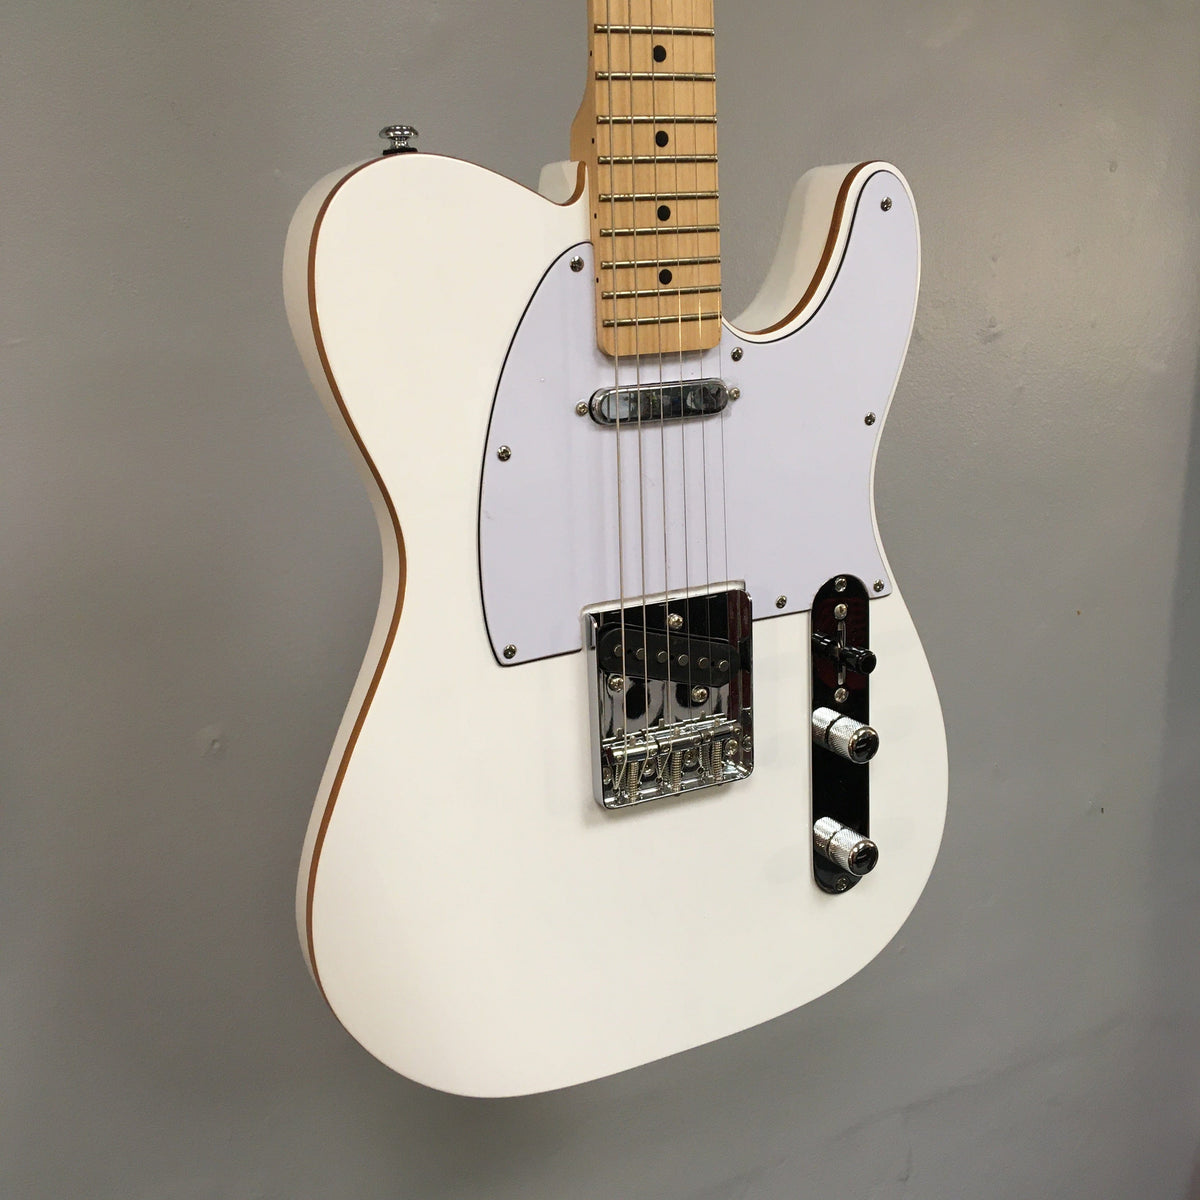 Michael Kelly 53 Gloss White Prototype Demo Guitars on Main